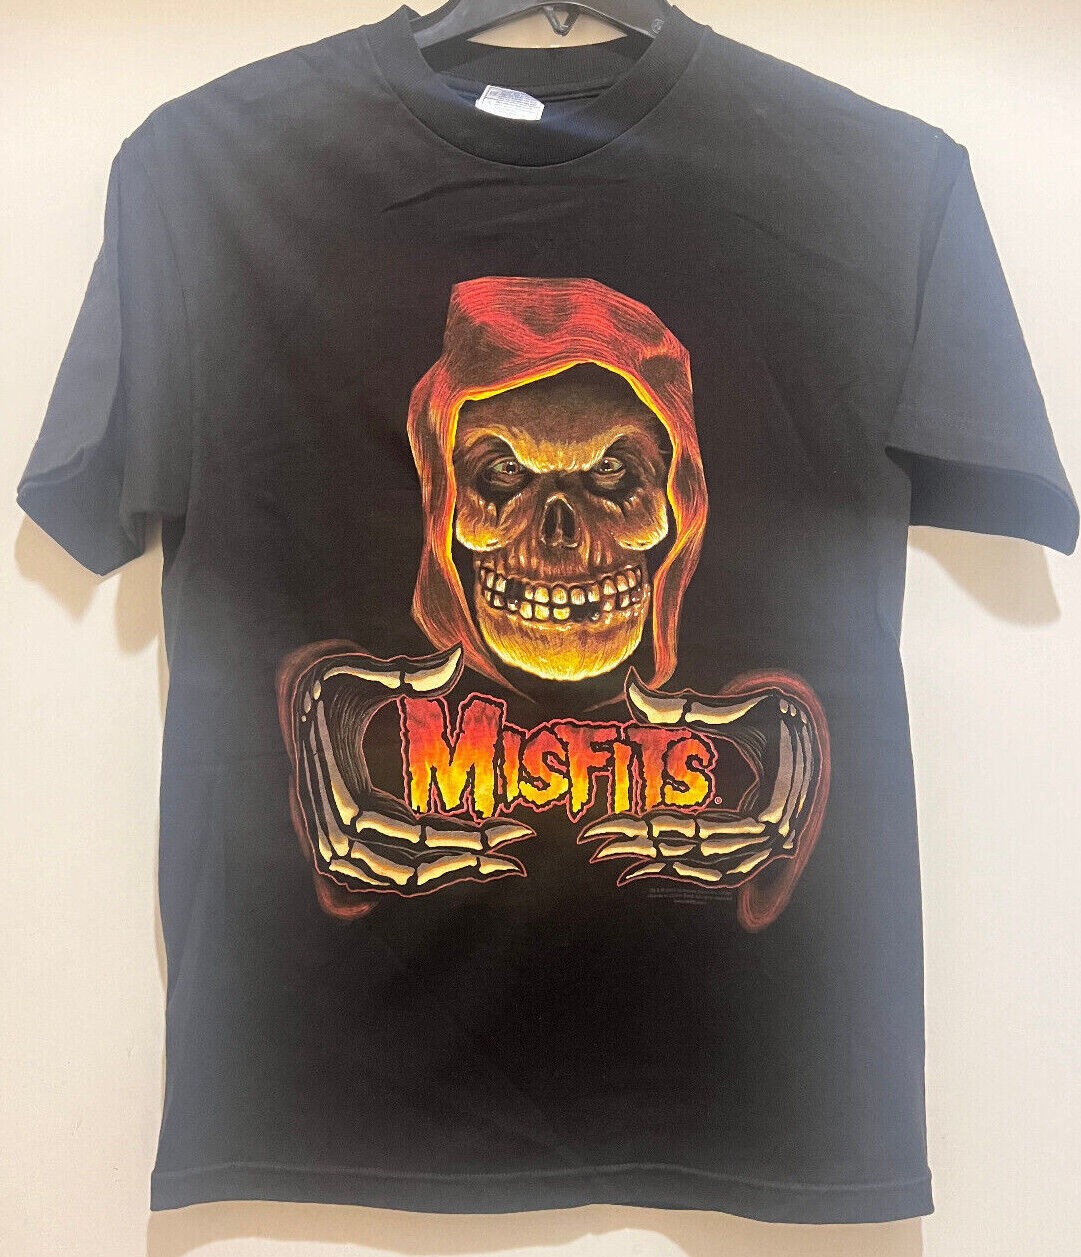 MISFITS Band Black T-Shirt - Licensed T-shirt - New missing Hand Tag